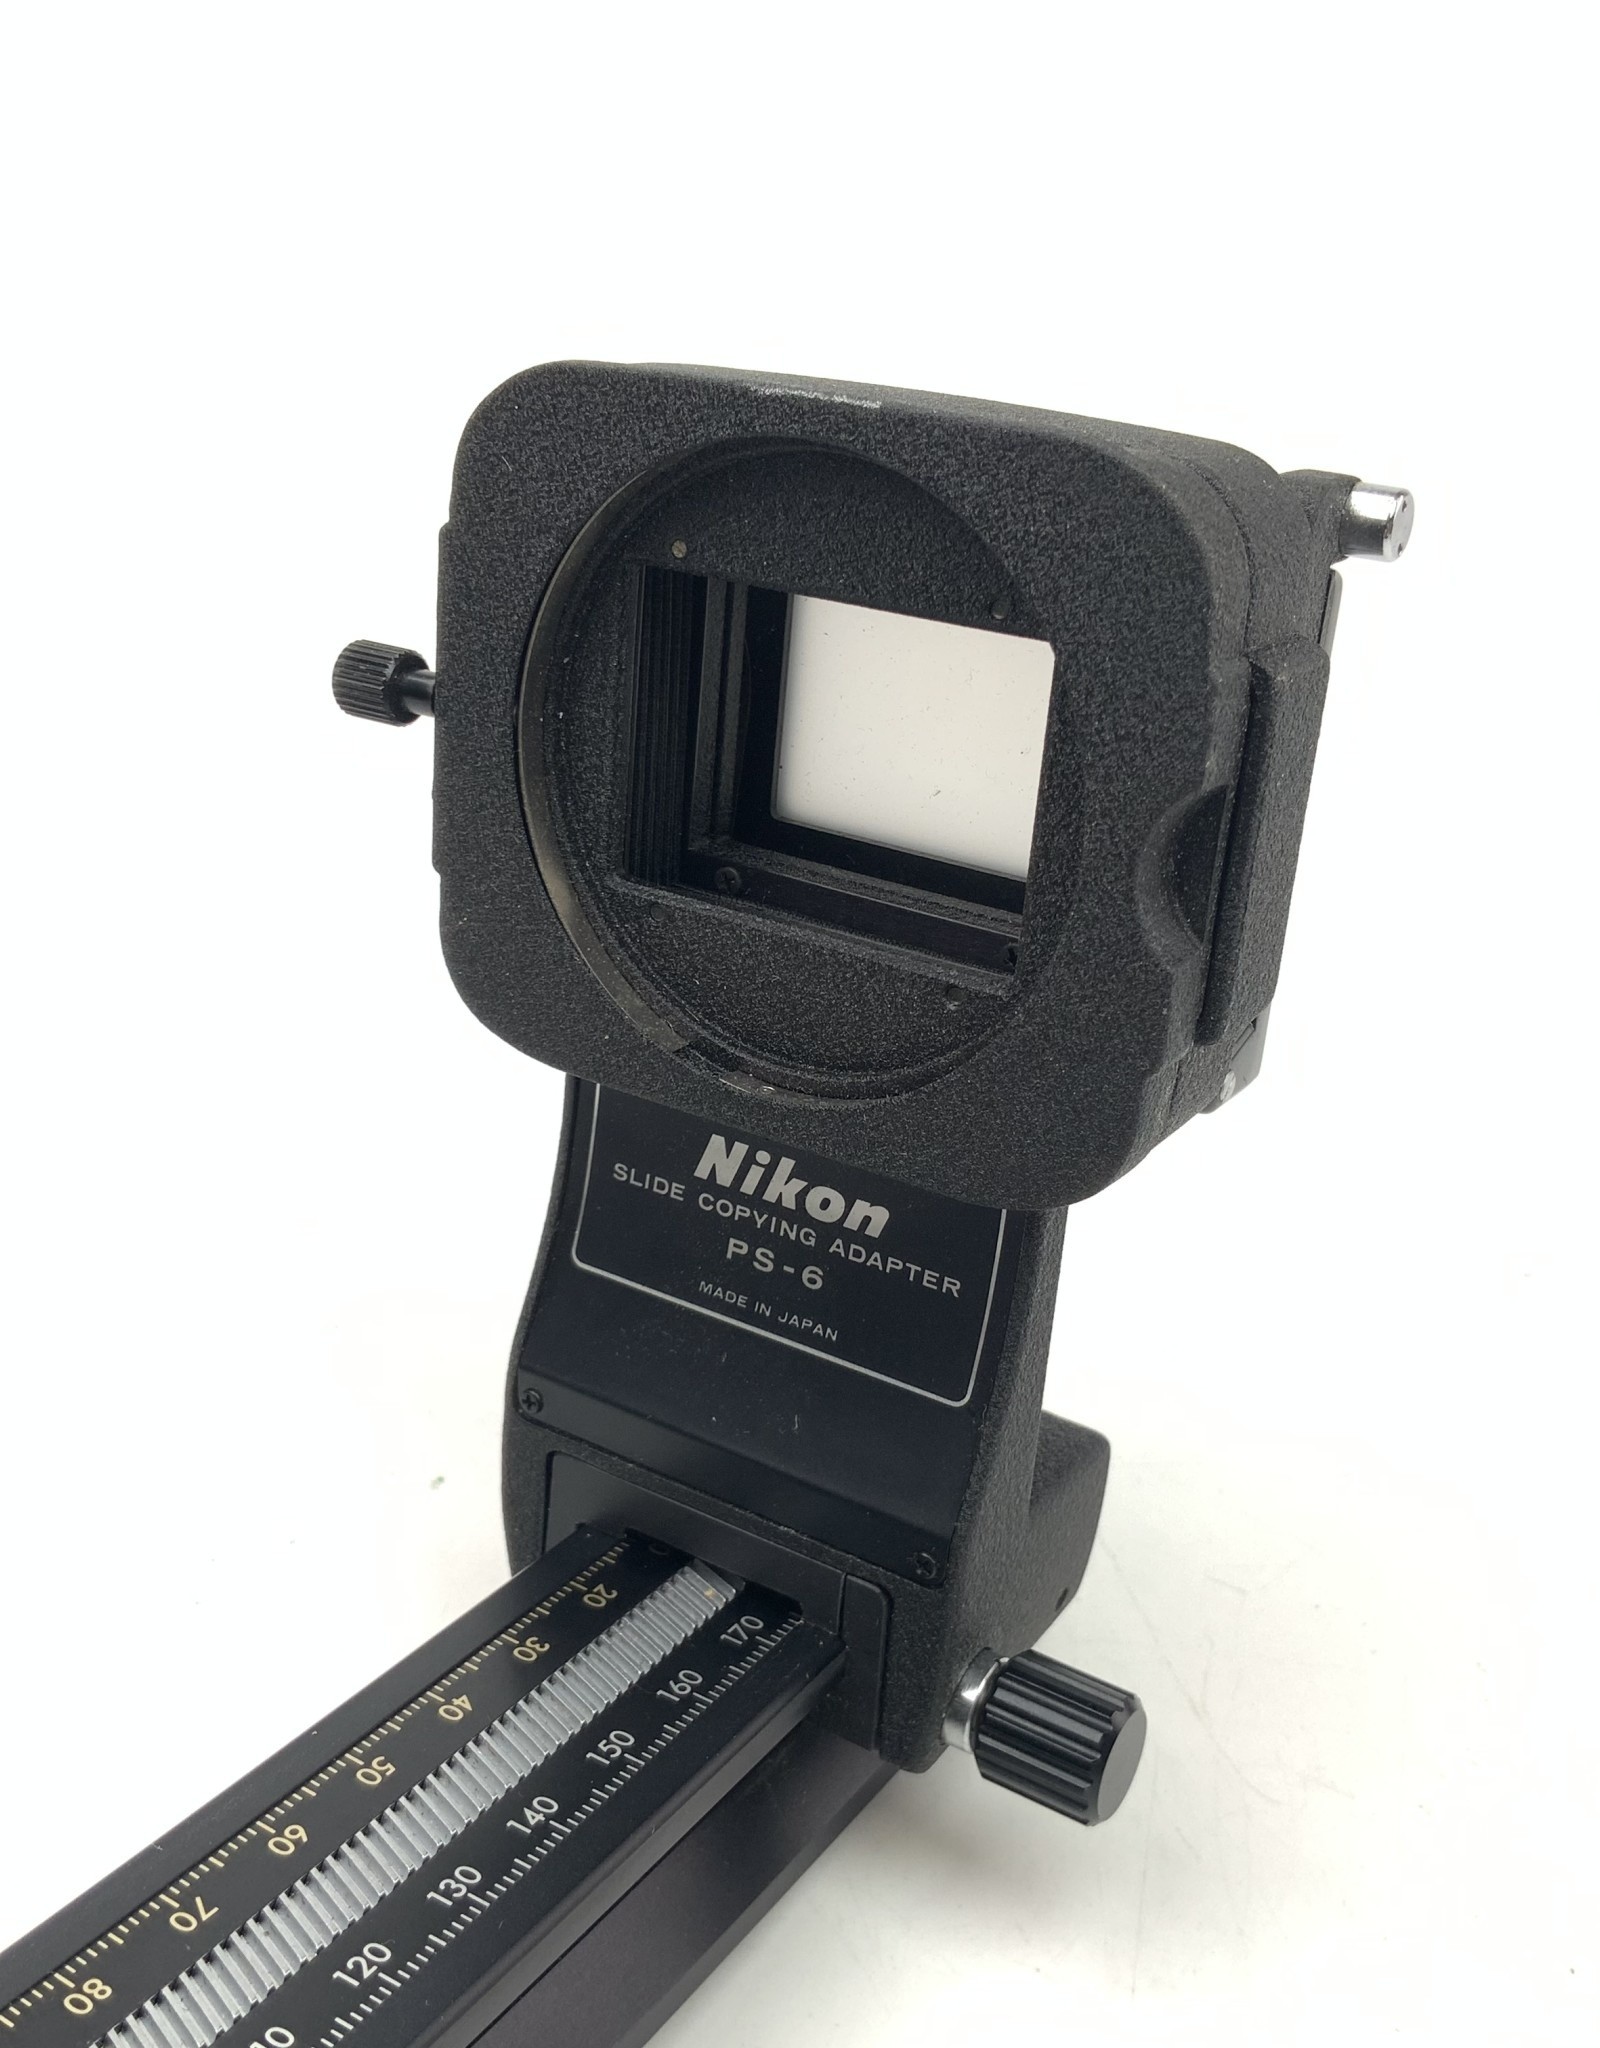 NIKON Nikon PB-6 Bellows w/ PS-6 Slide Copy Adapter Used Good